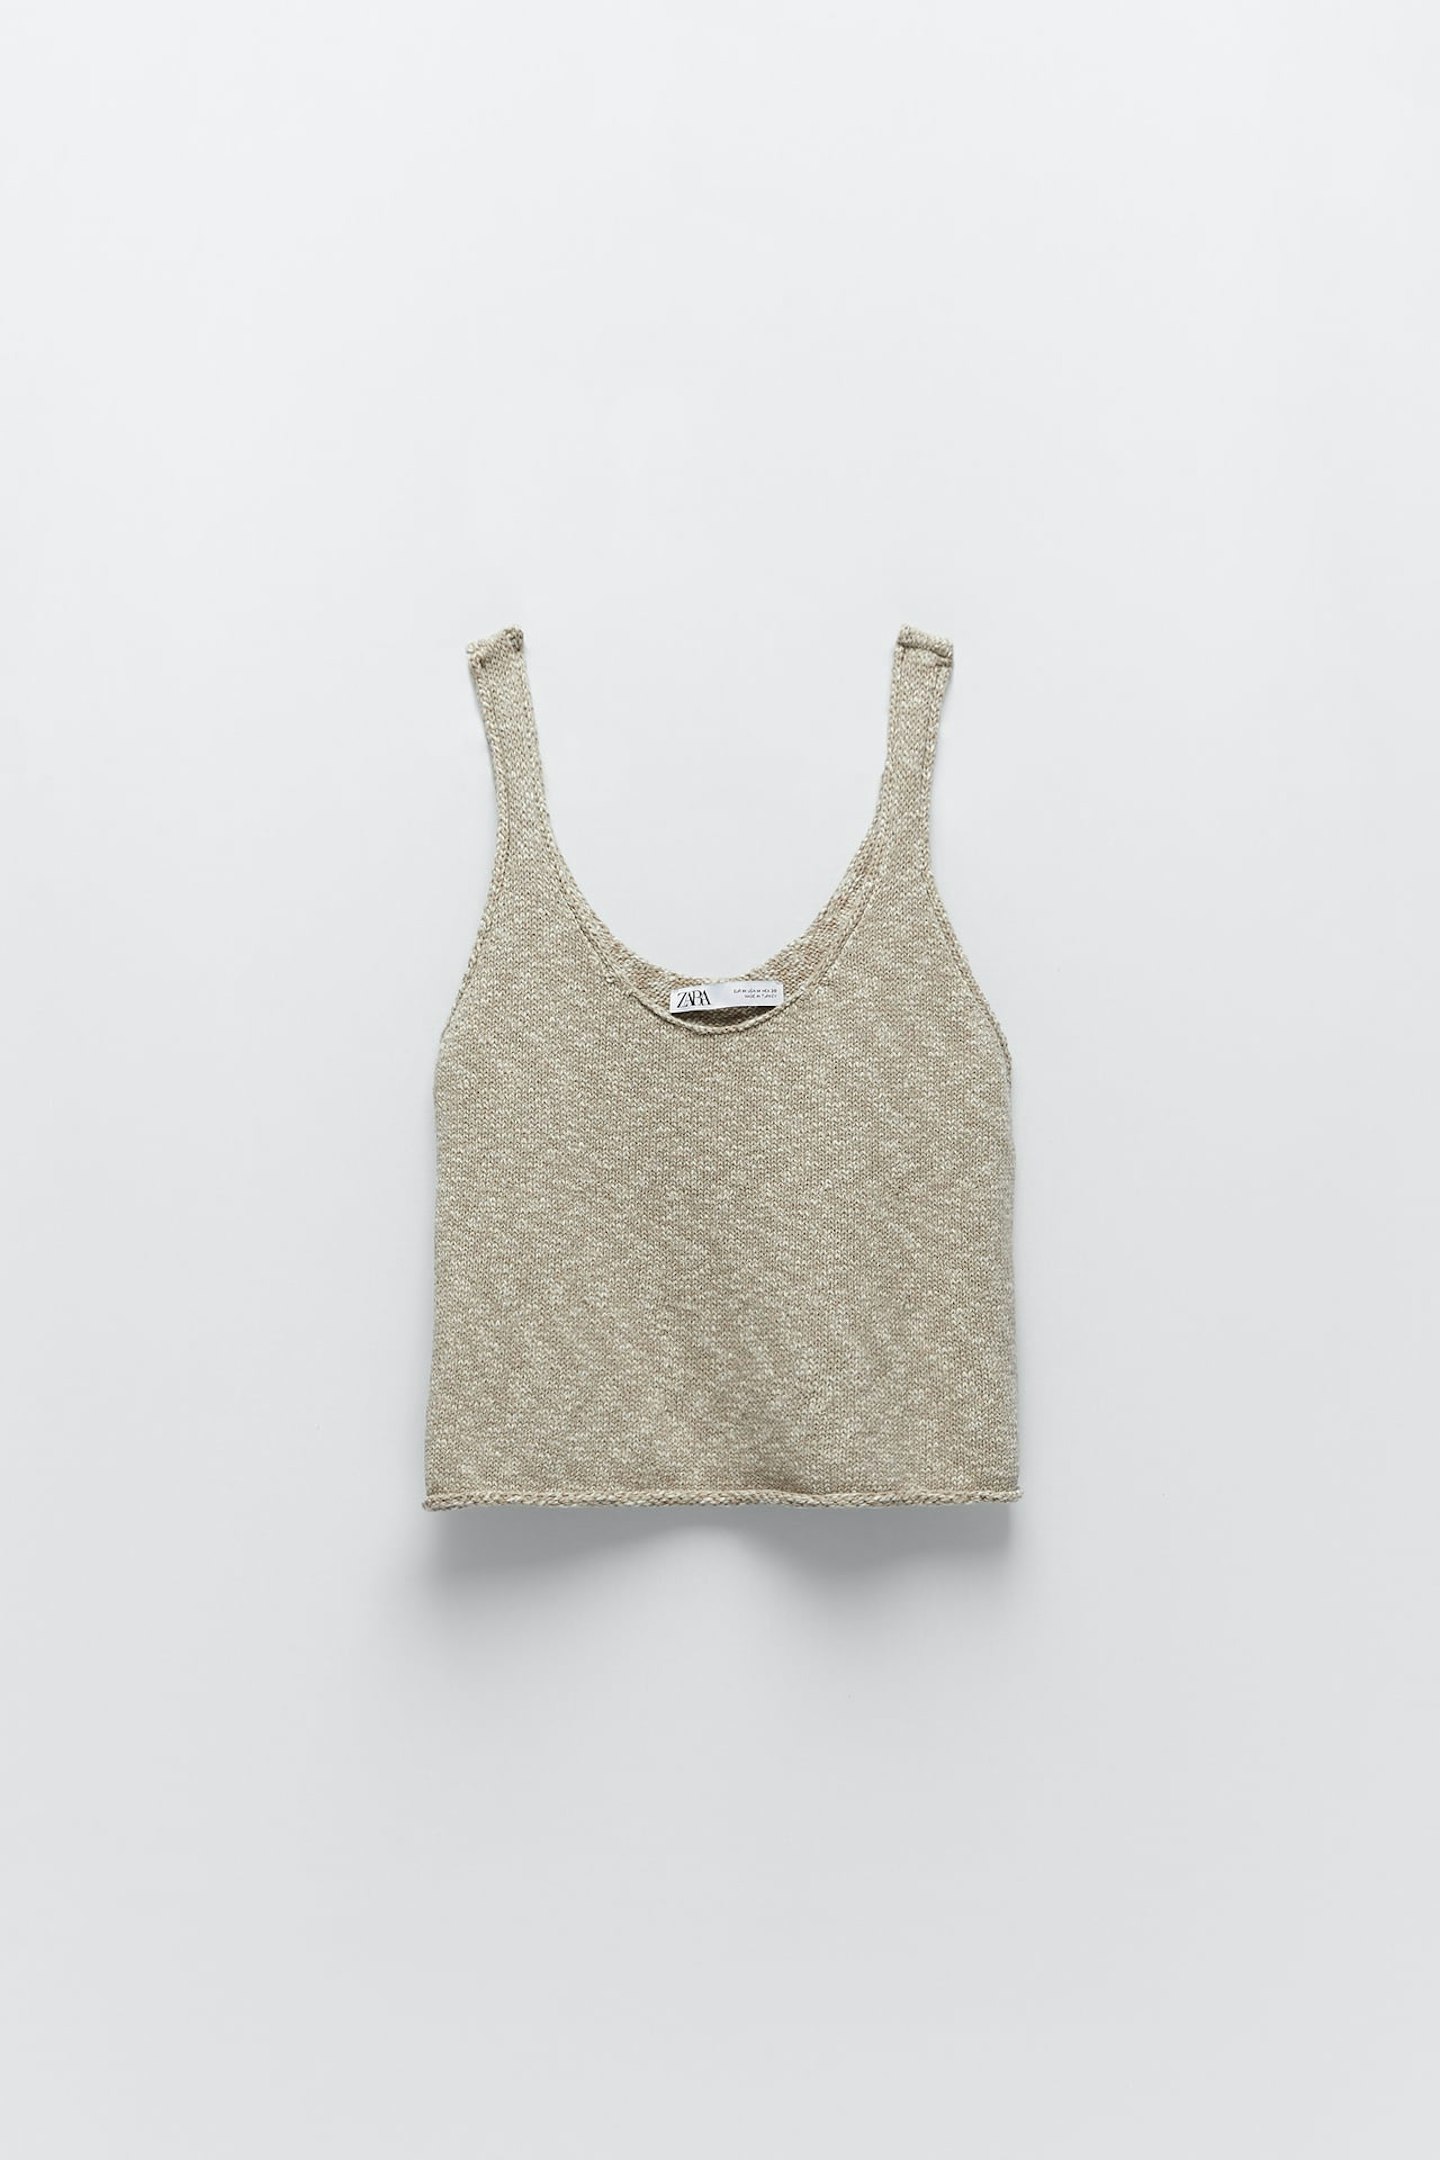 Zara, Knit Crop Top, £12.99